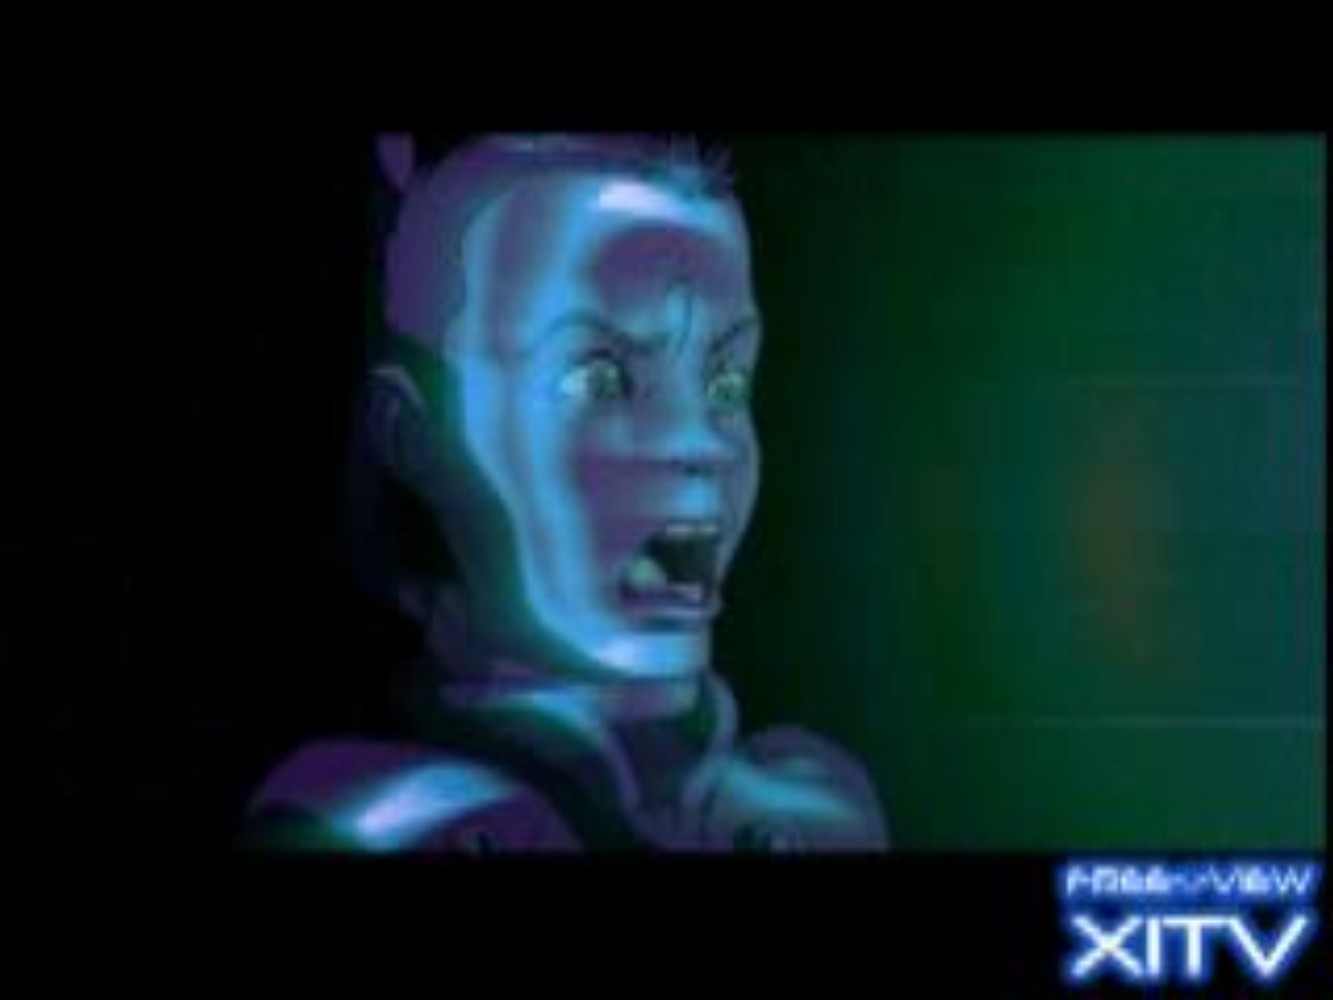 XITV FREE <> VIEW "DARK FURY" Starring Rhianna Griffith and Vin Diesel!